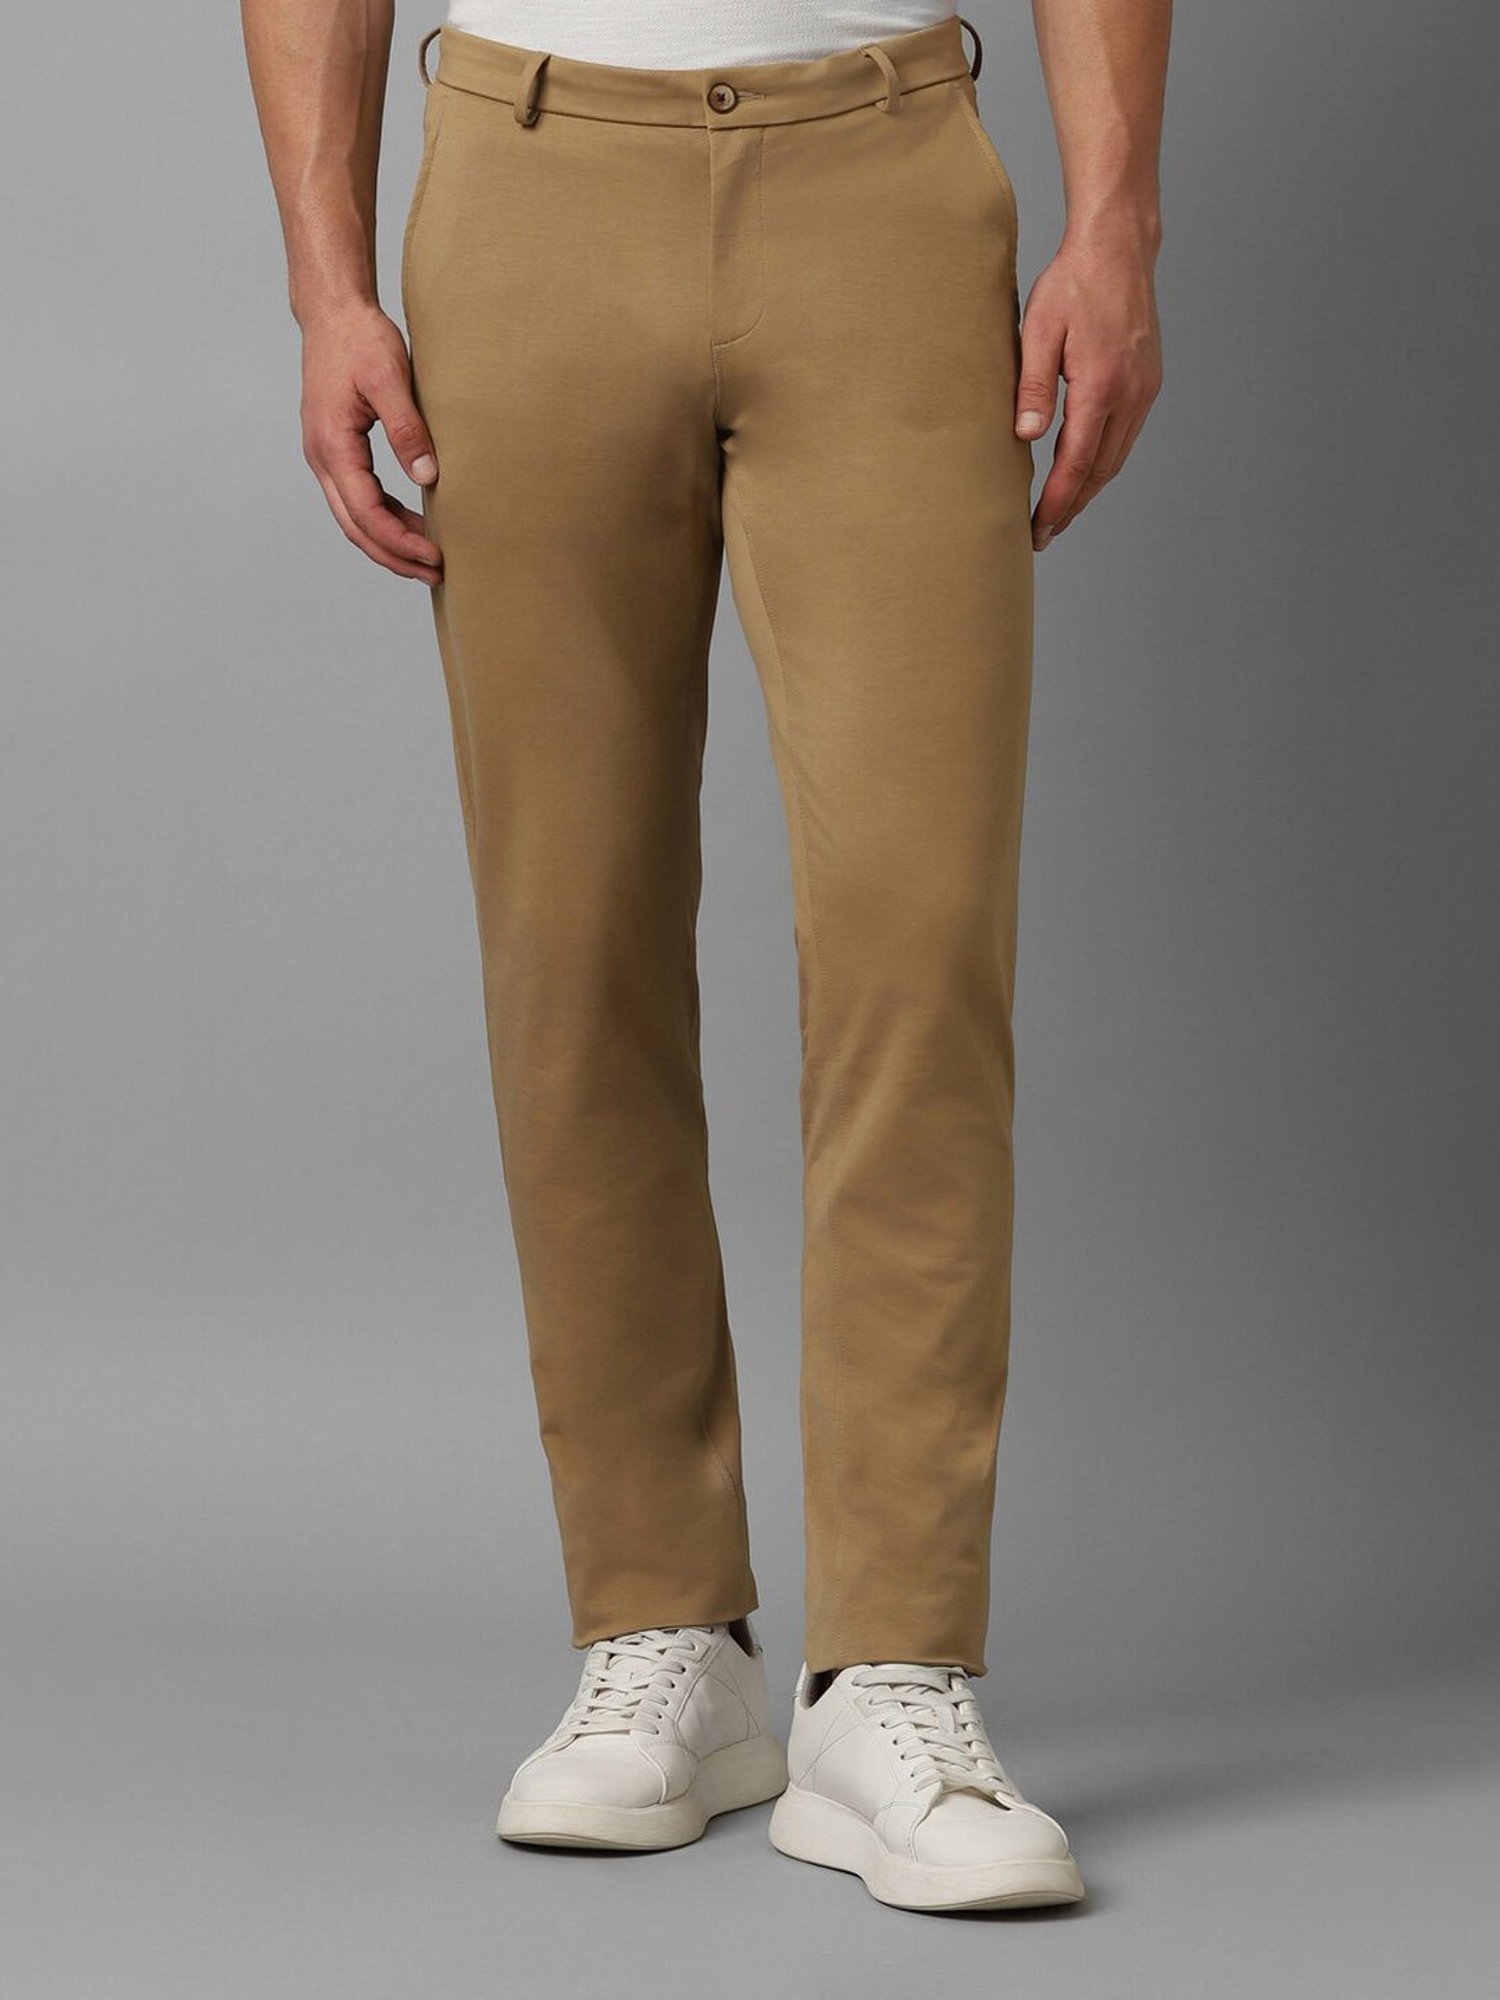 Buy Louis Philippe Men Grey Slim Fit Formal Trousers - Trousers for Men  19447256 | Myntra